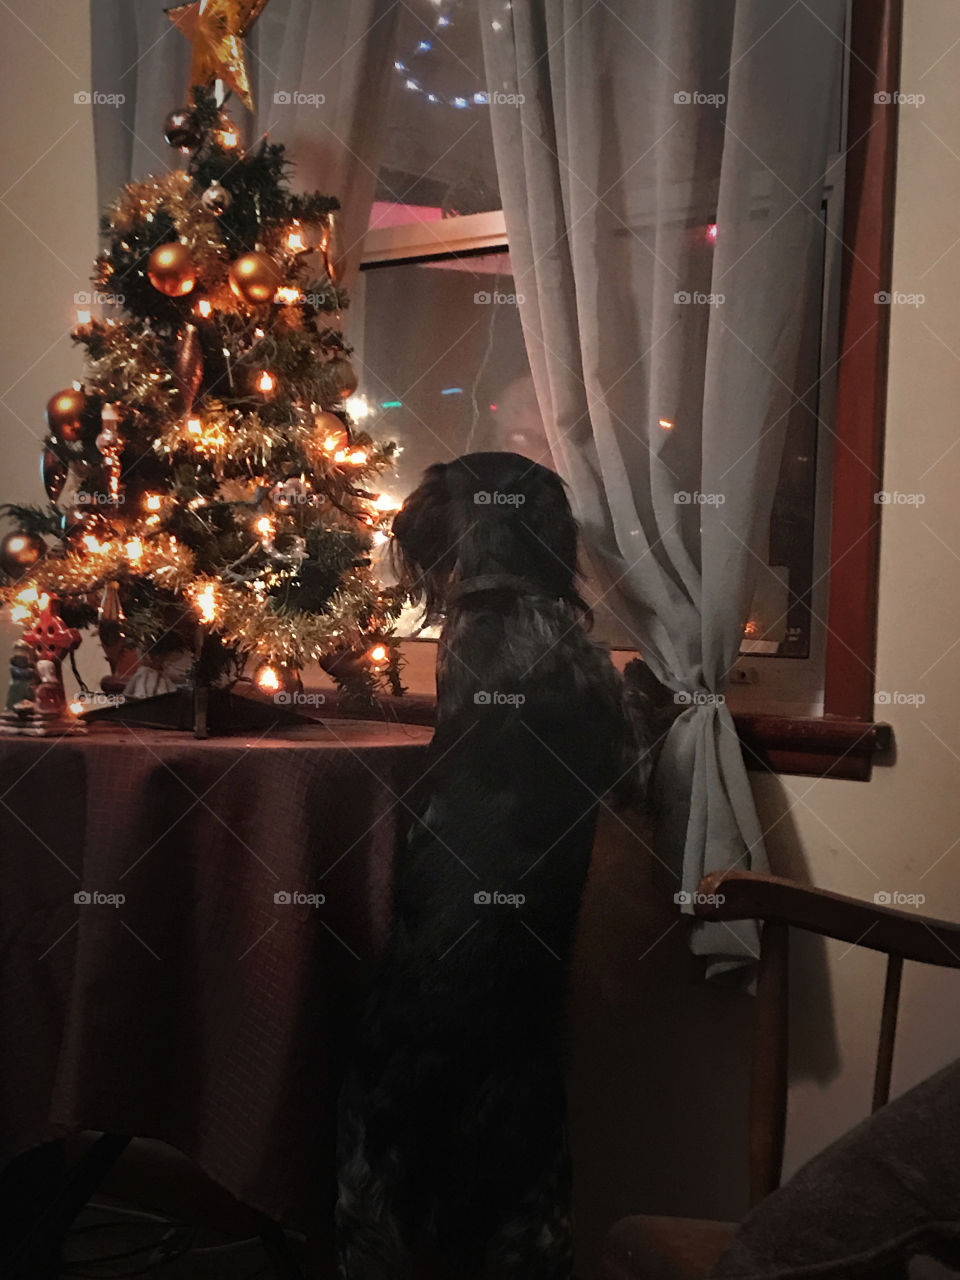 Dog waiting for Santa next to the Christmas tree